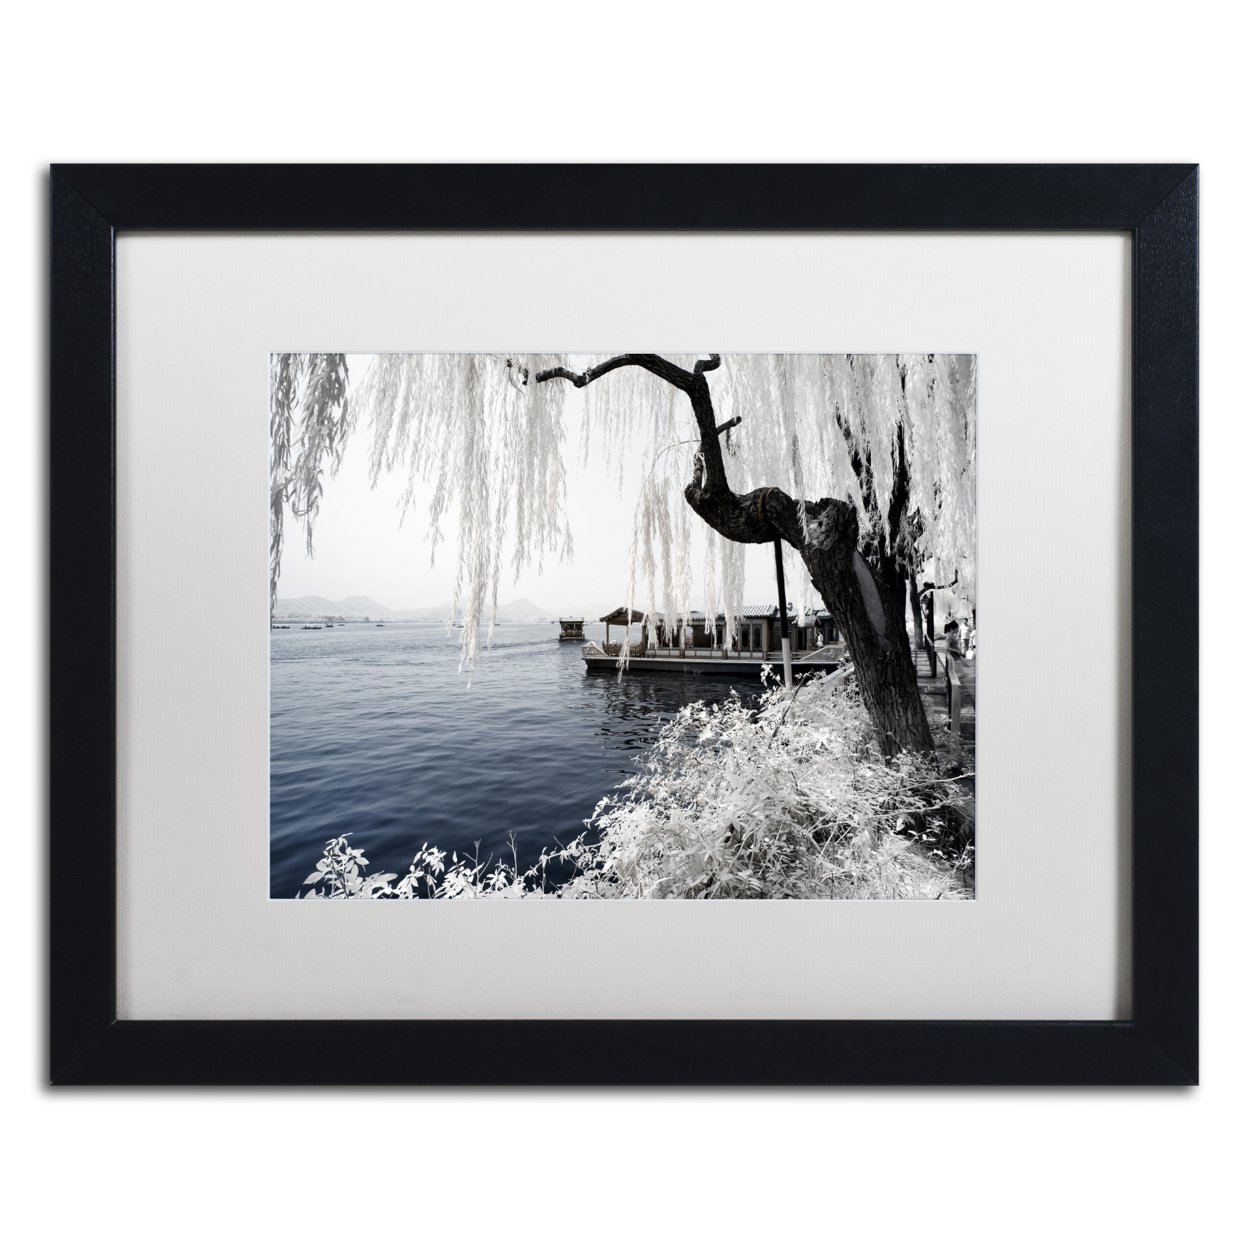 Philippe Hugonnard 'Lake Winter' Black Wooden Framed Art 18 X 22 Inches